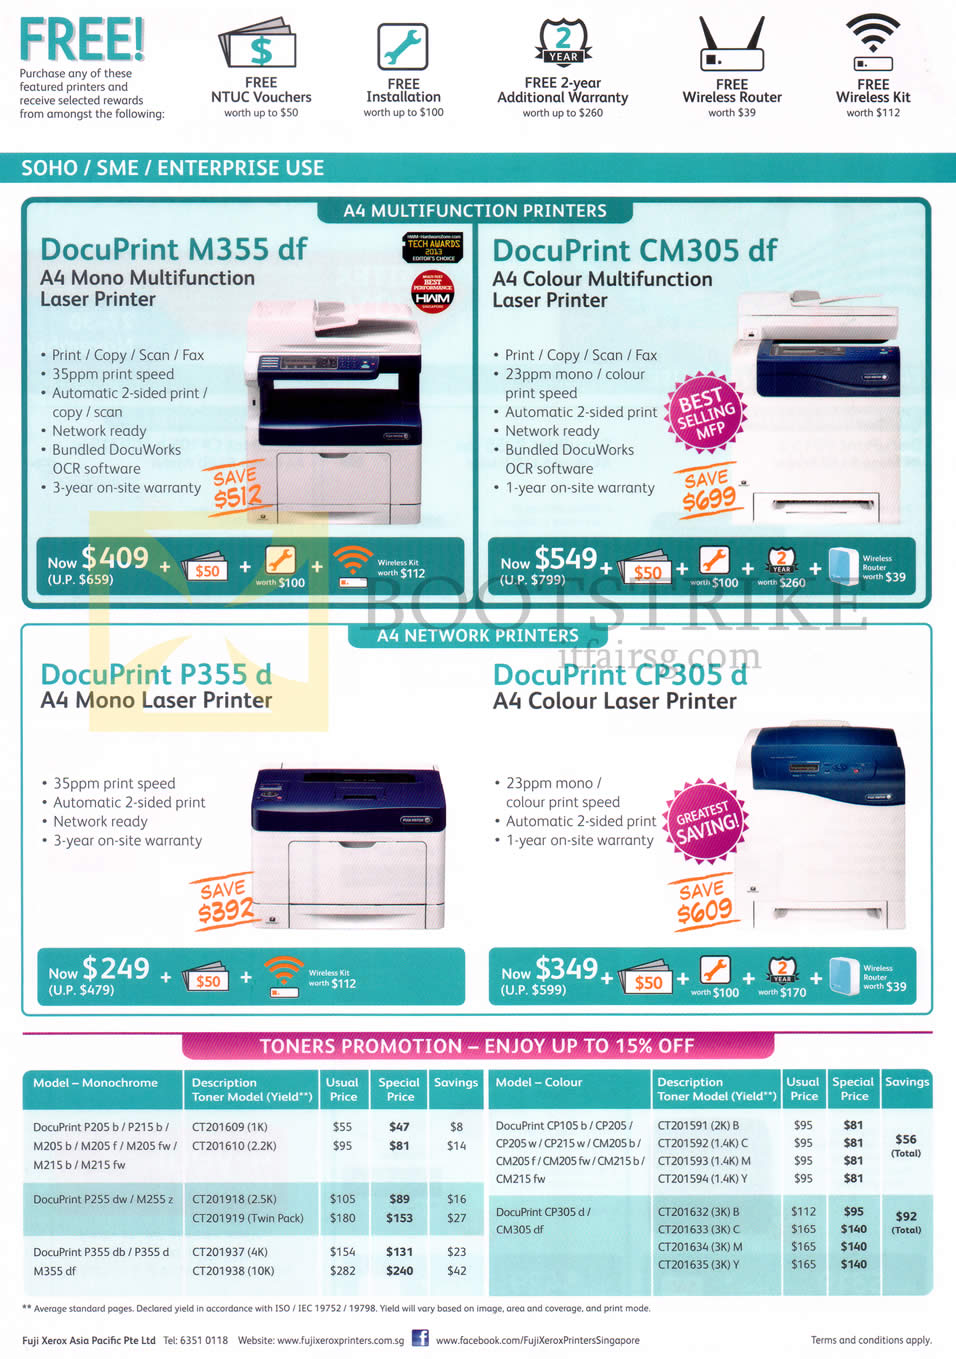 SITEX 2014 price list image brochure of Fuji Zerox Printers DocuPrint M355df, CM305df, P355d, CP305d, Toners